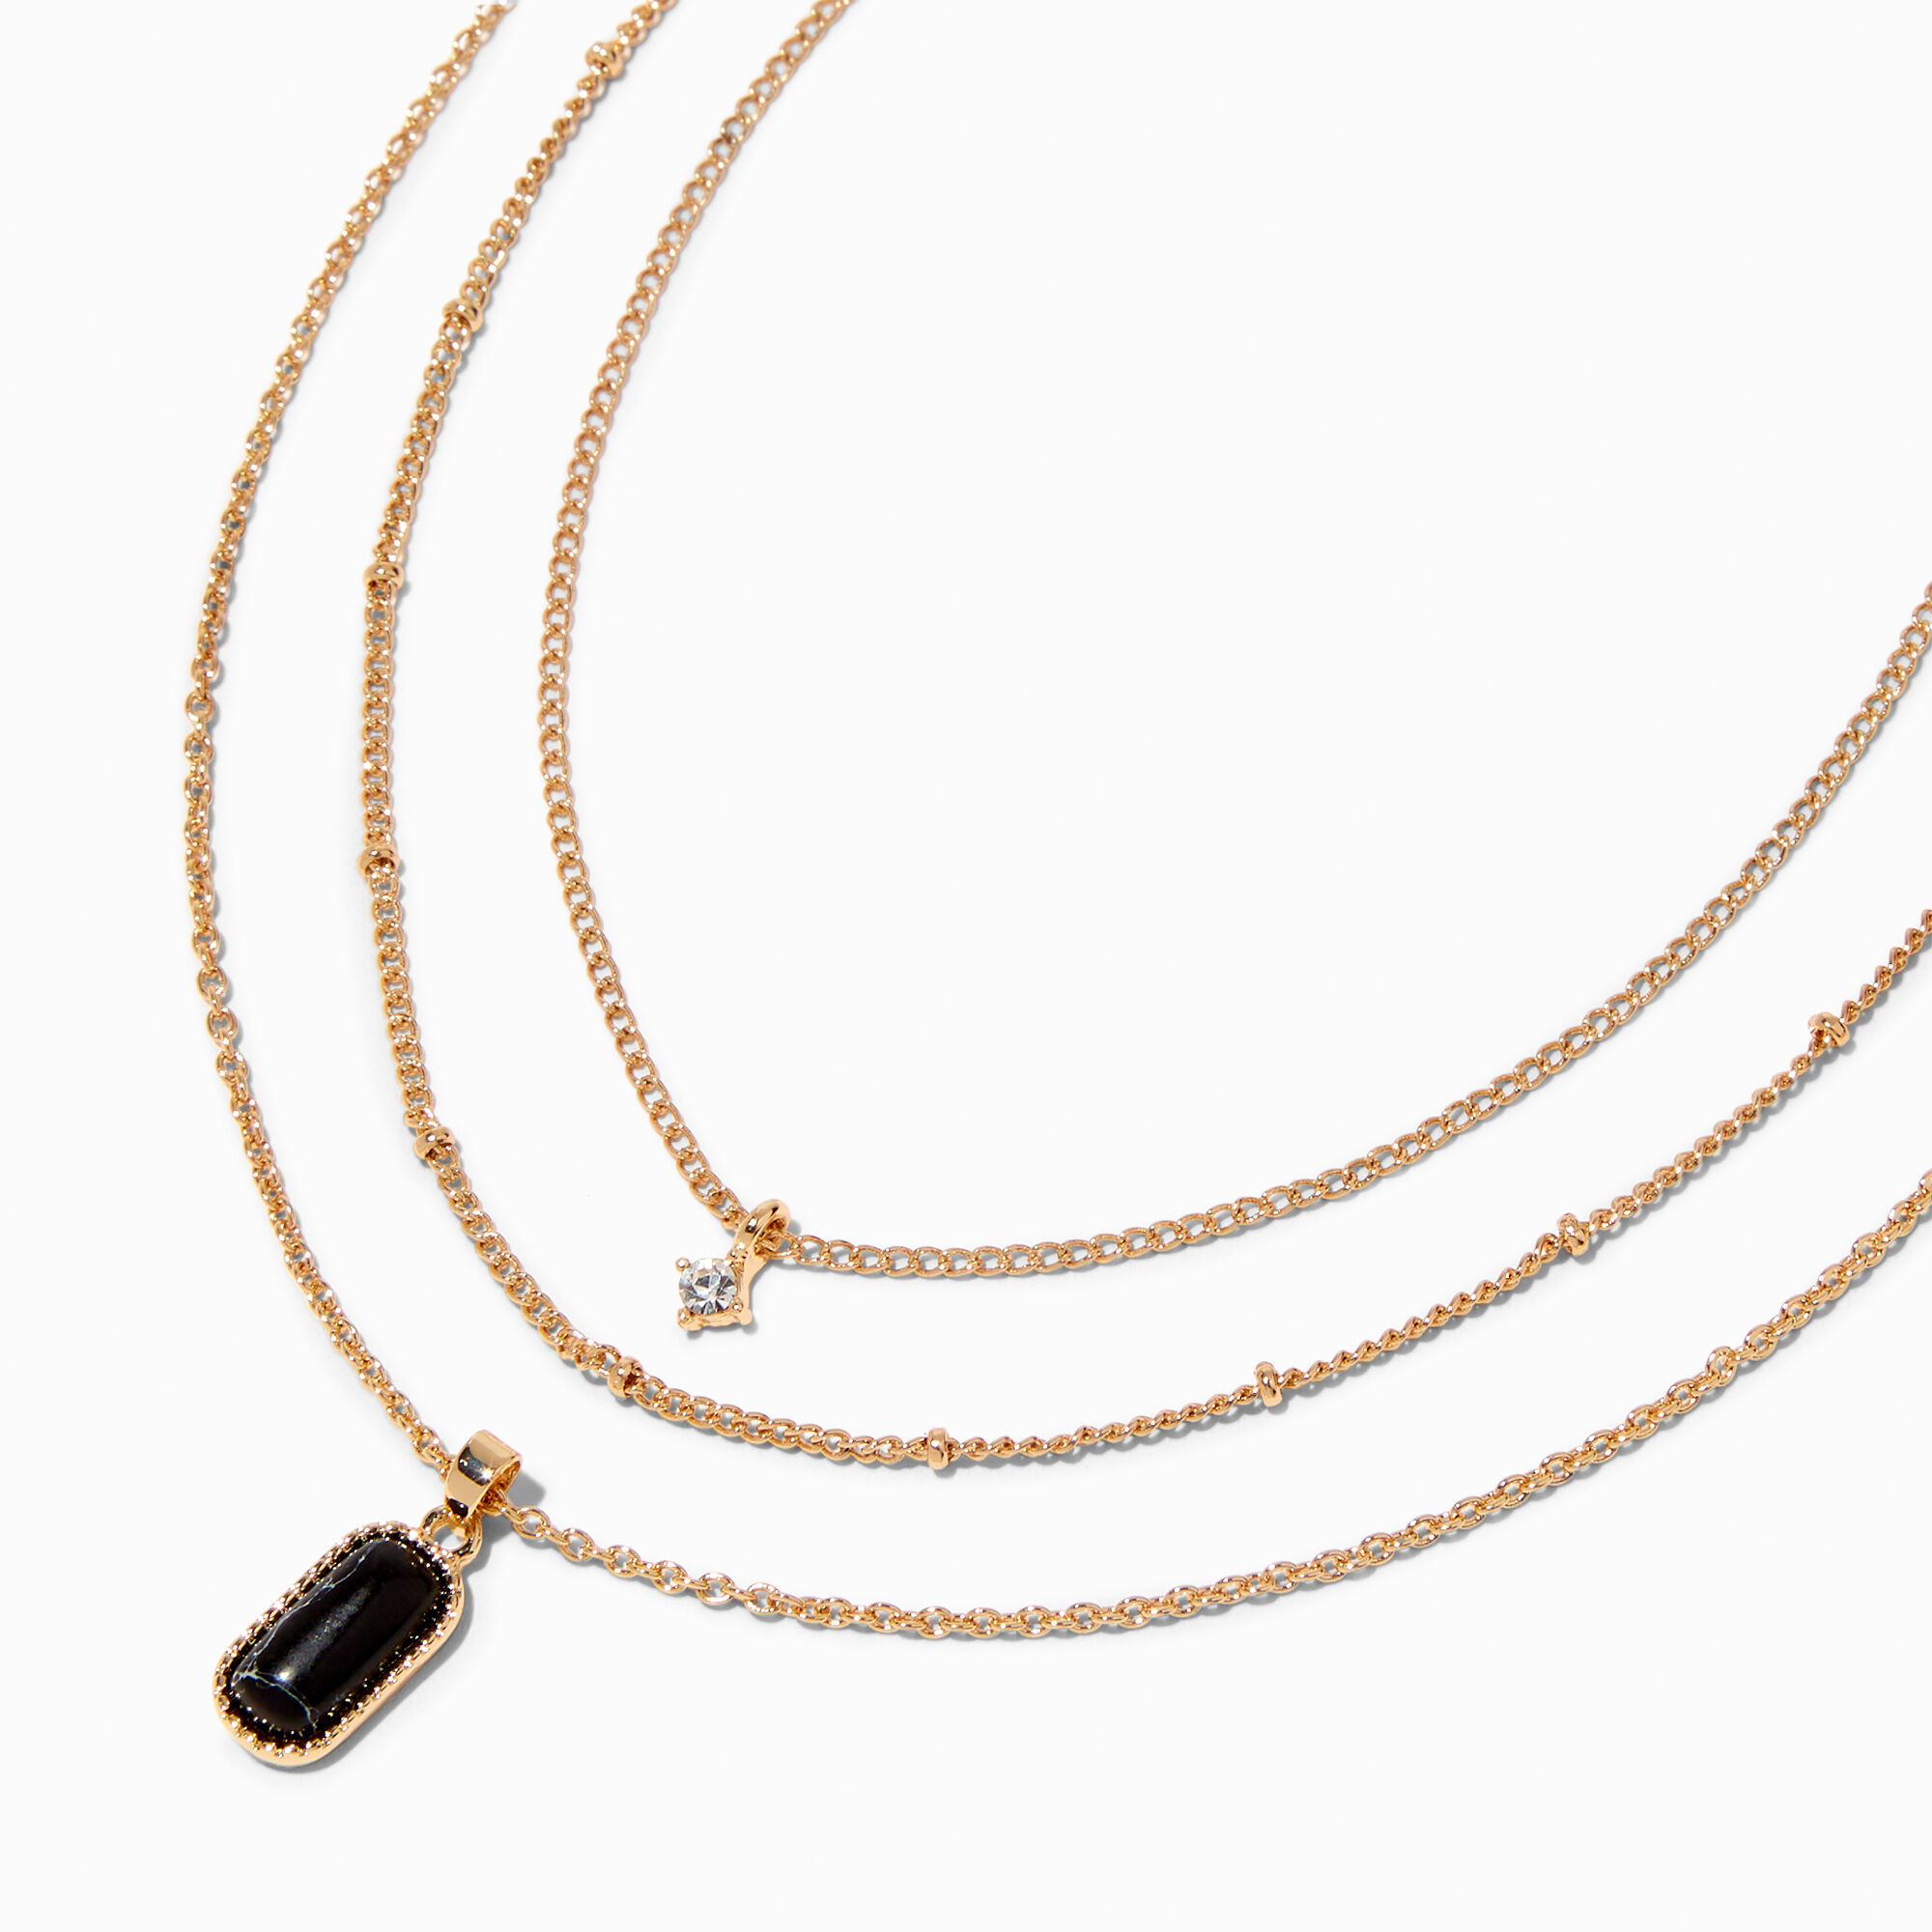 View Claires Gold Starbust Enamel Pendant Necklaces 3 Pack Black information